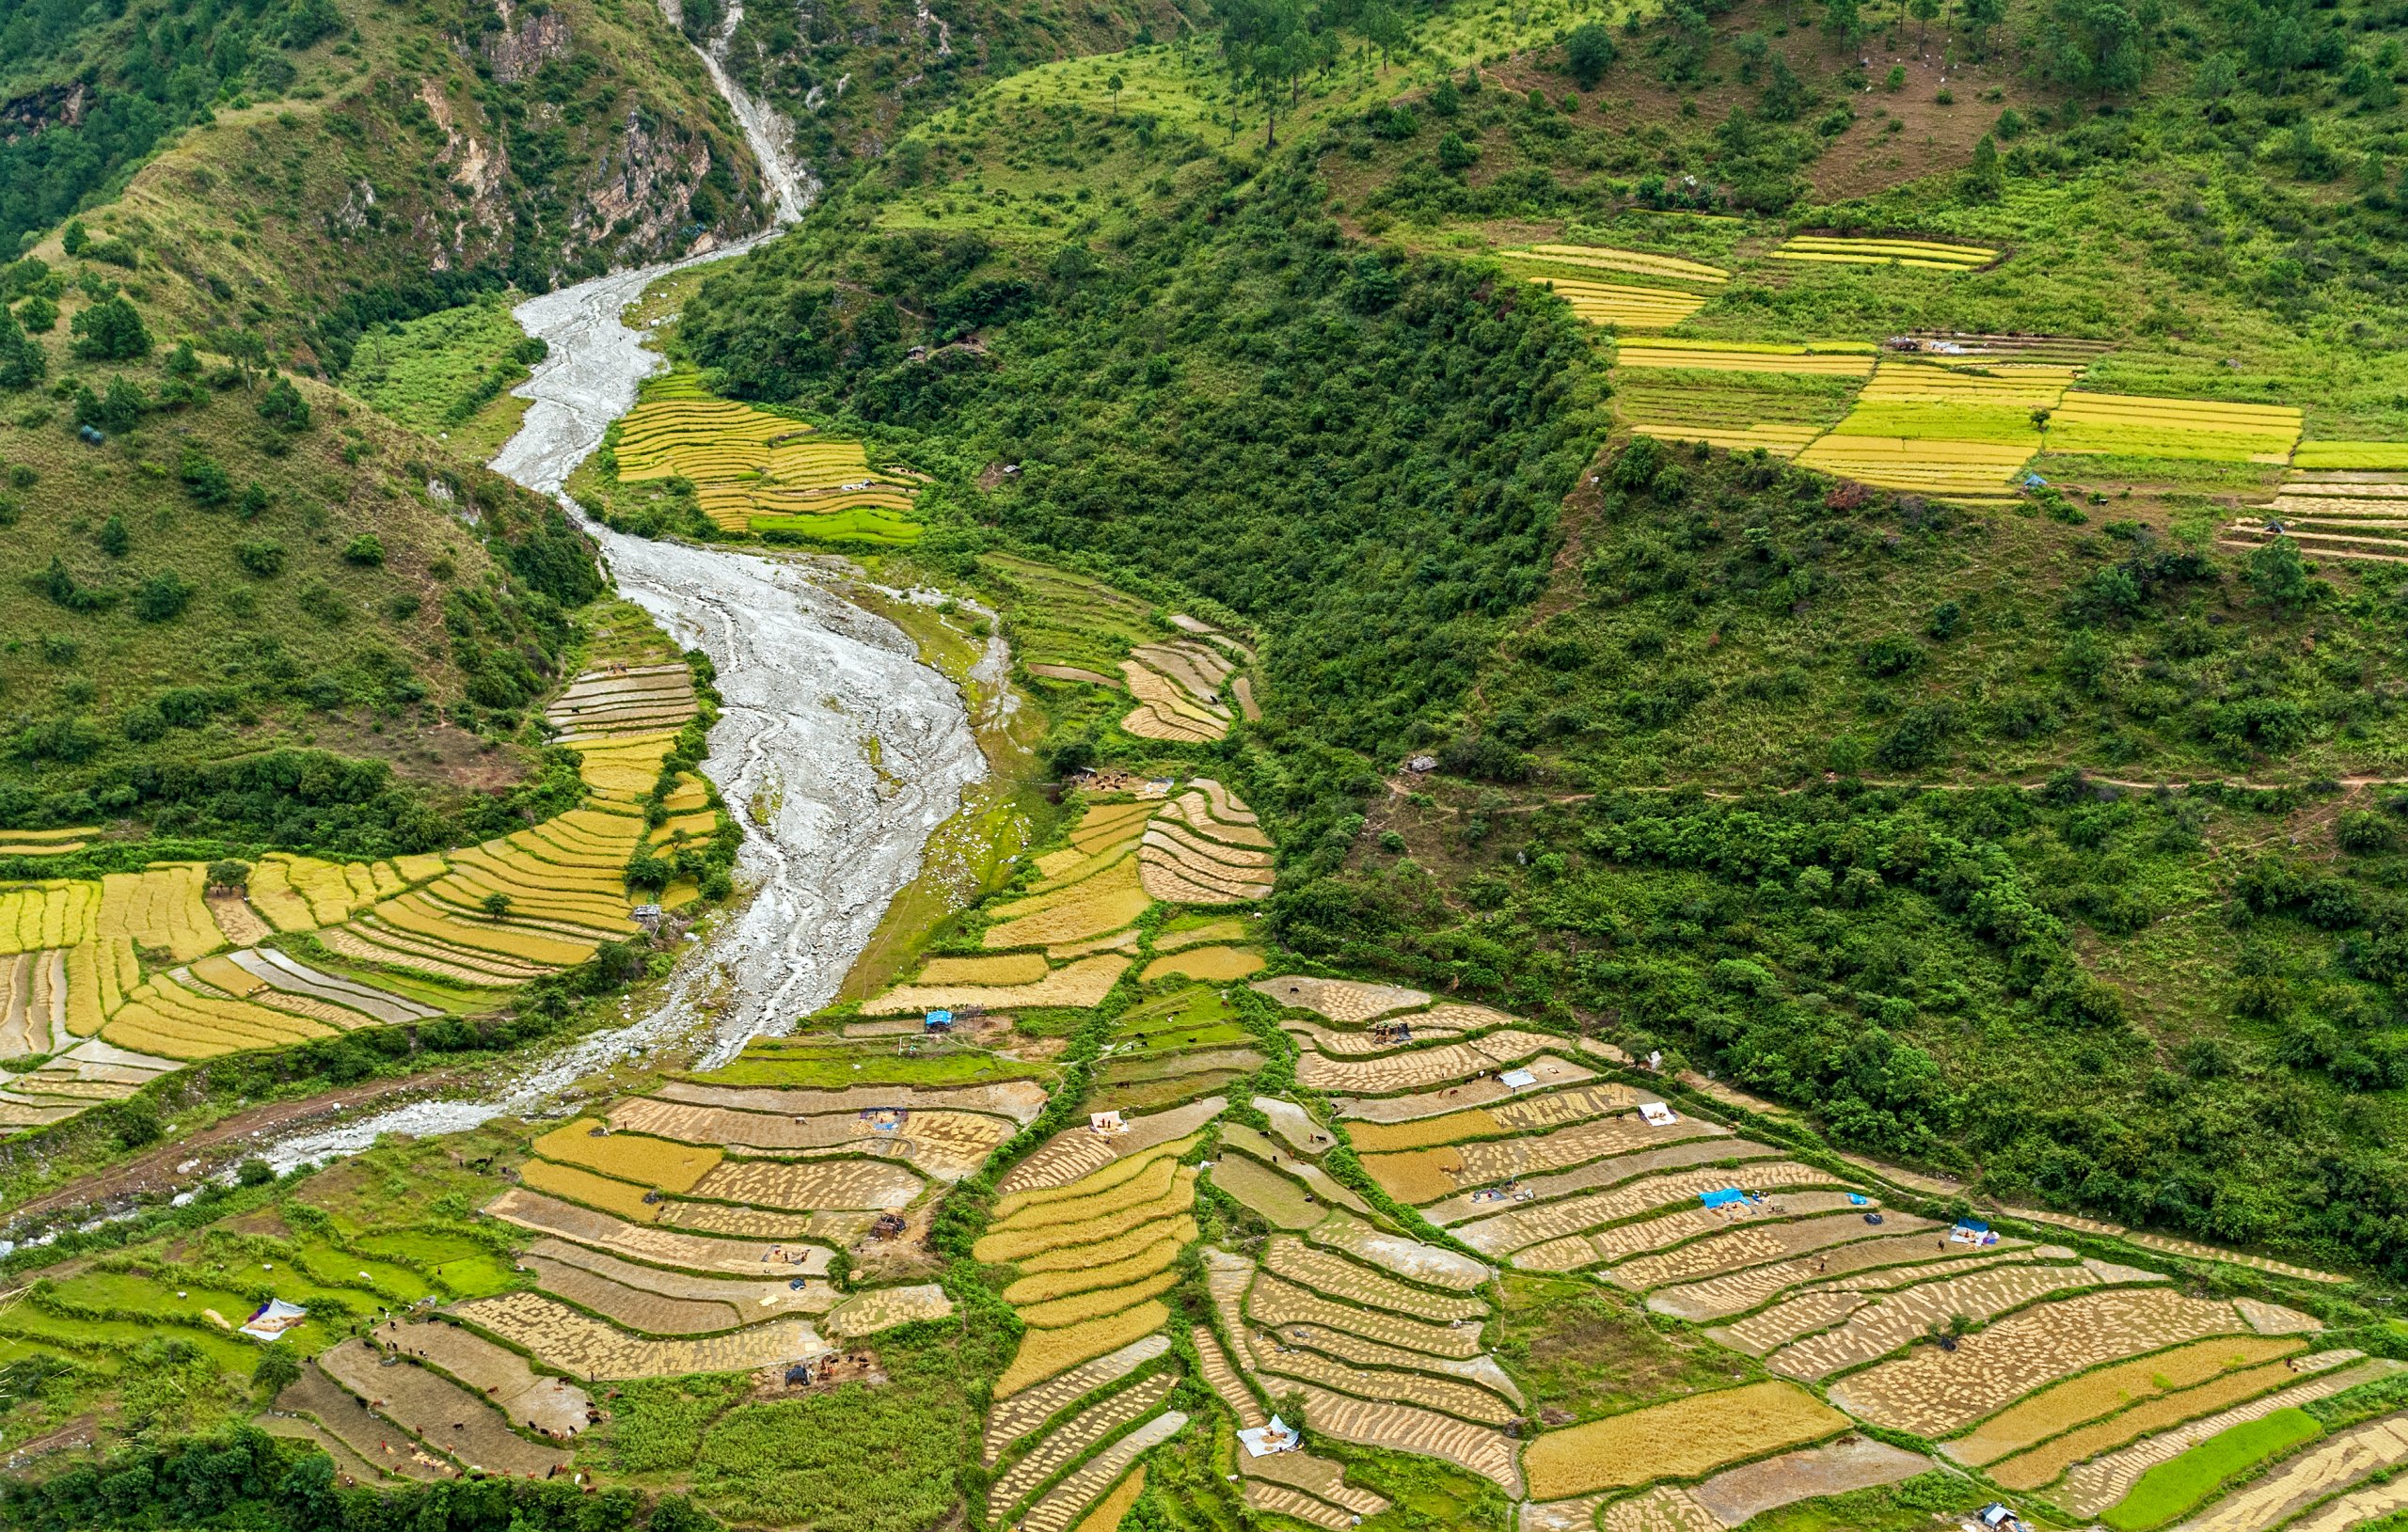 Picturesque agricultural landscape in rural Bhutan